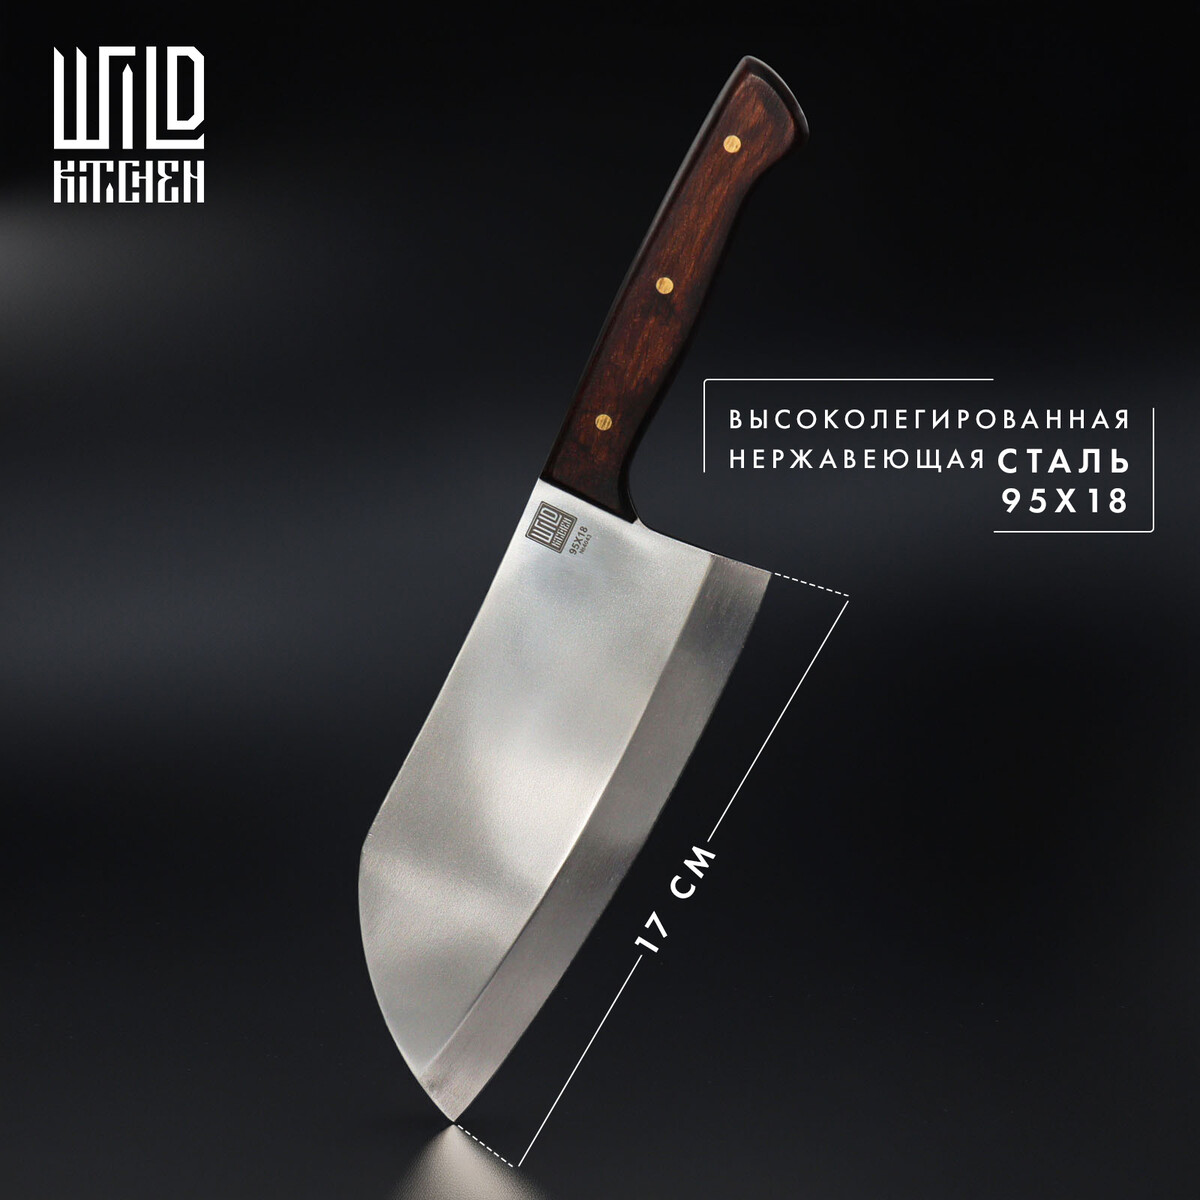 Нож - топорик средний wild kitchen, сталь 95×18, лезвие 17 см нож пчак кухонный wild kitchen сталь 95×18 лезвие 16 5 см